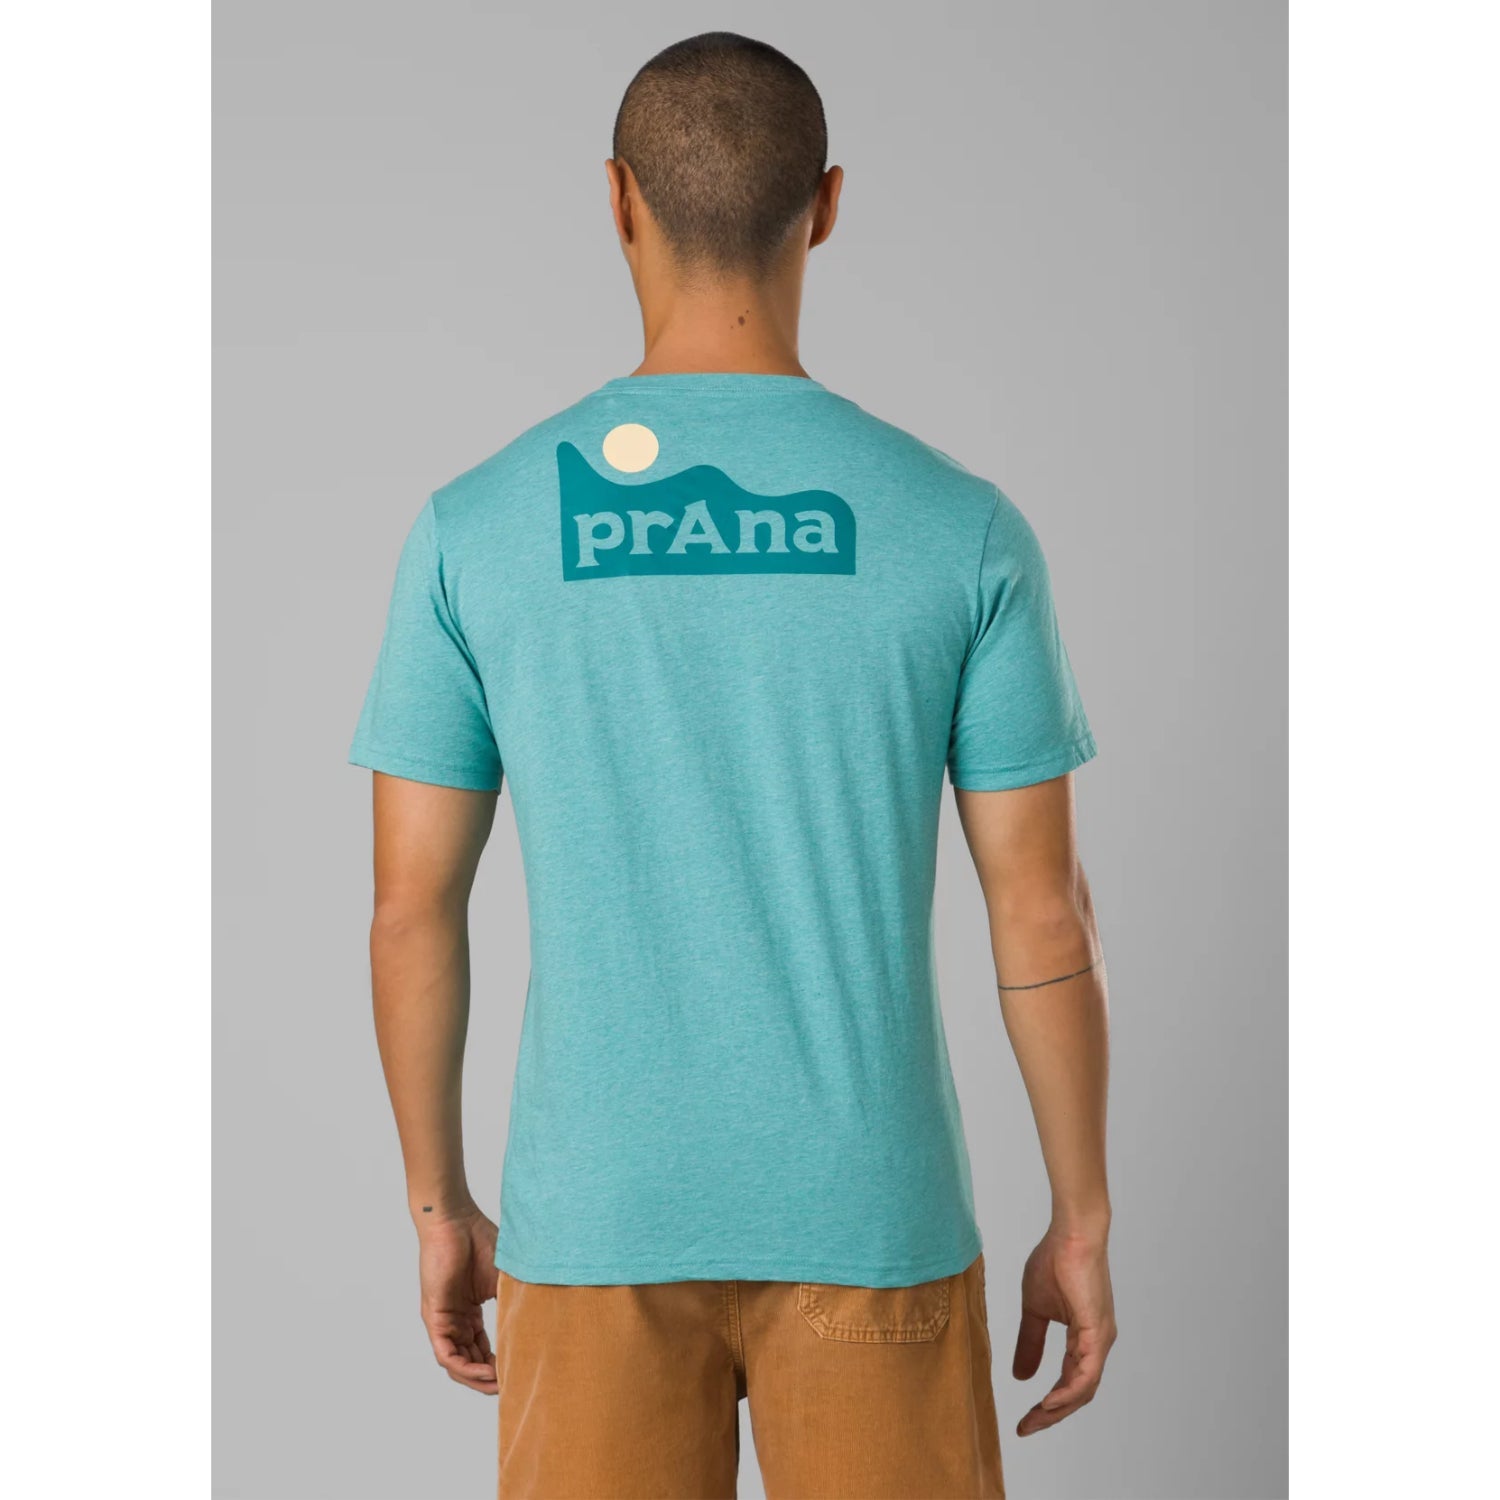 Prana Graphic Short Sleeve T-Shirt in aqua heather colour